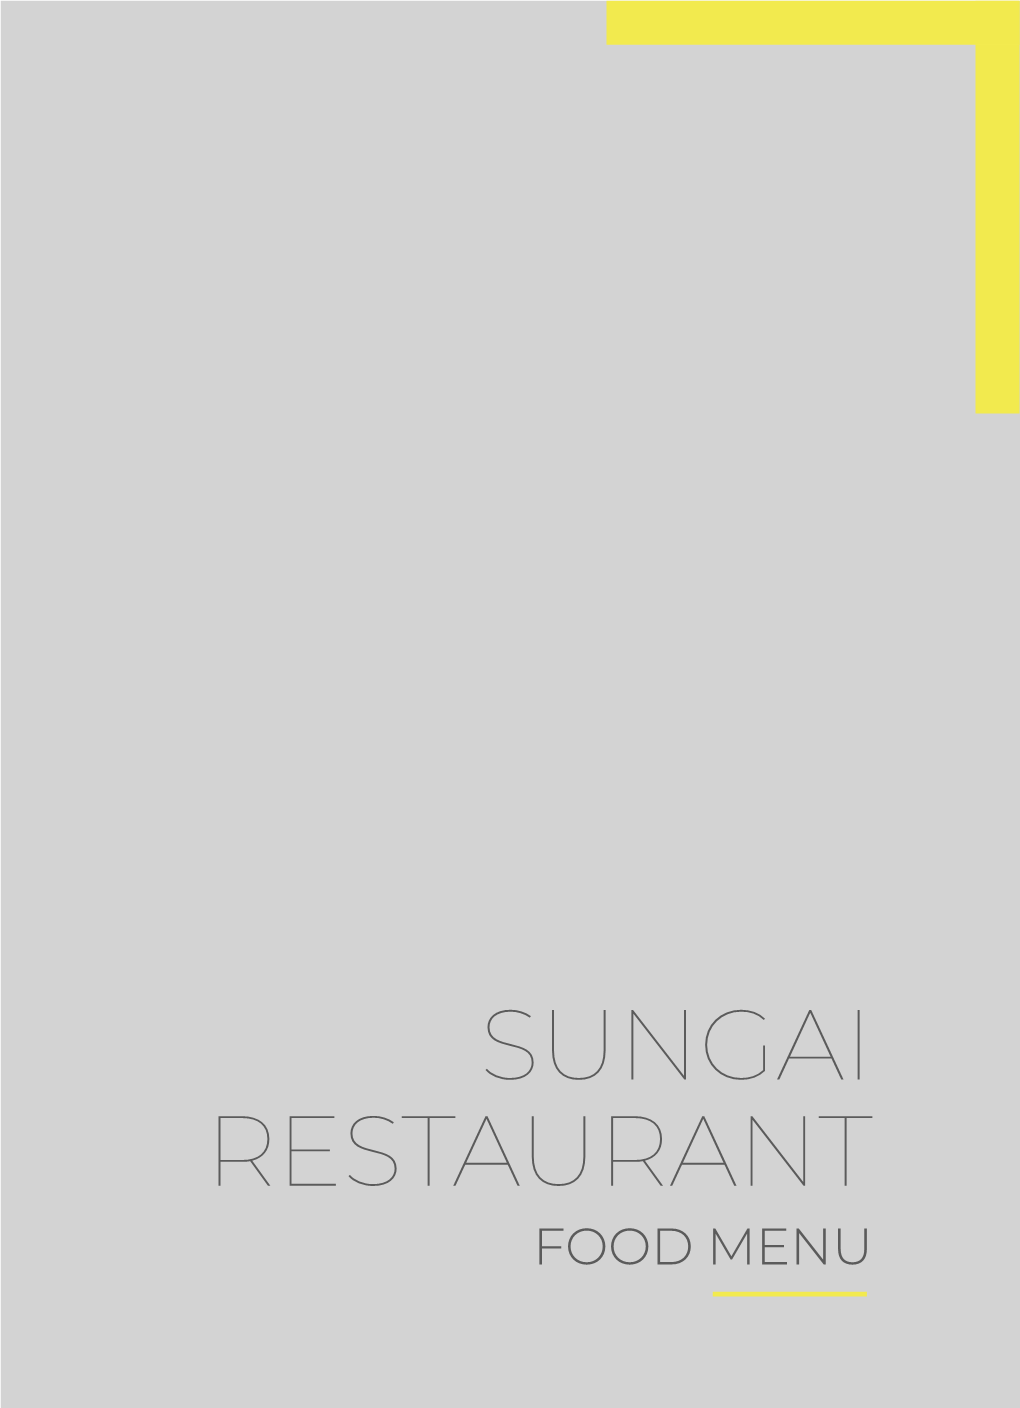 Sungai Restaurant Menu 2021